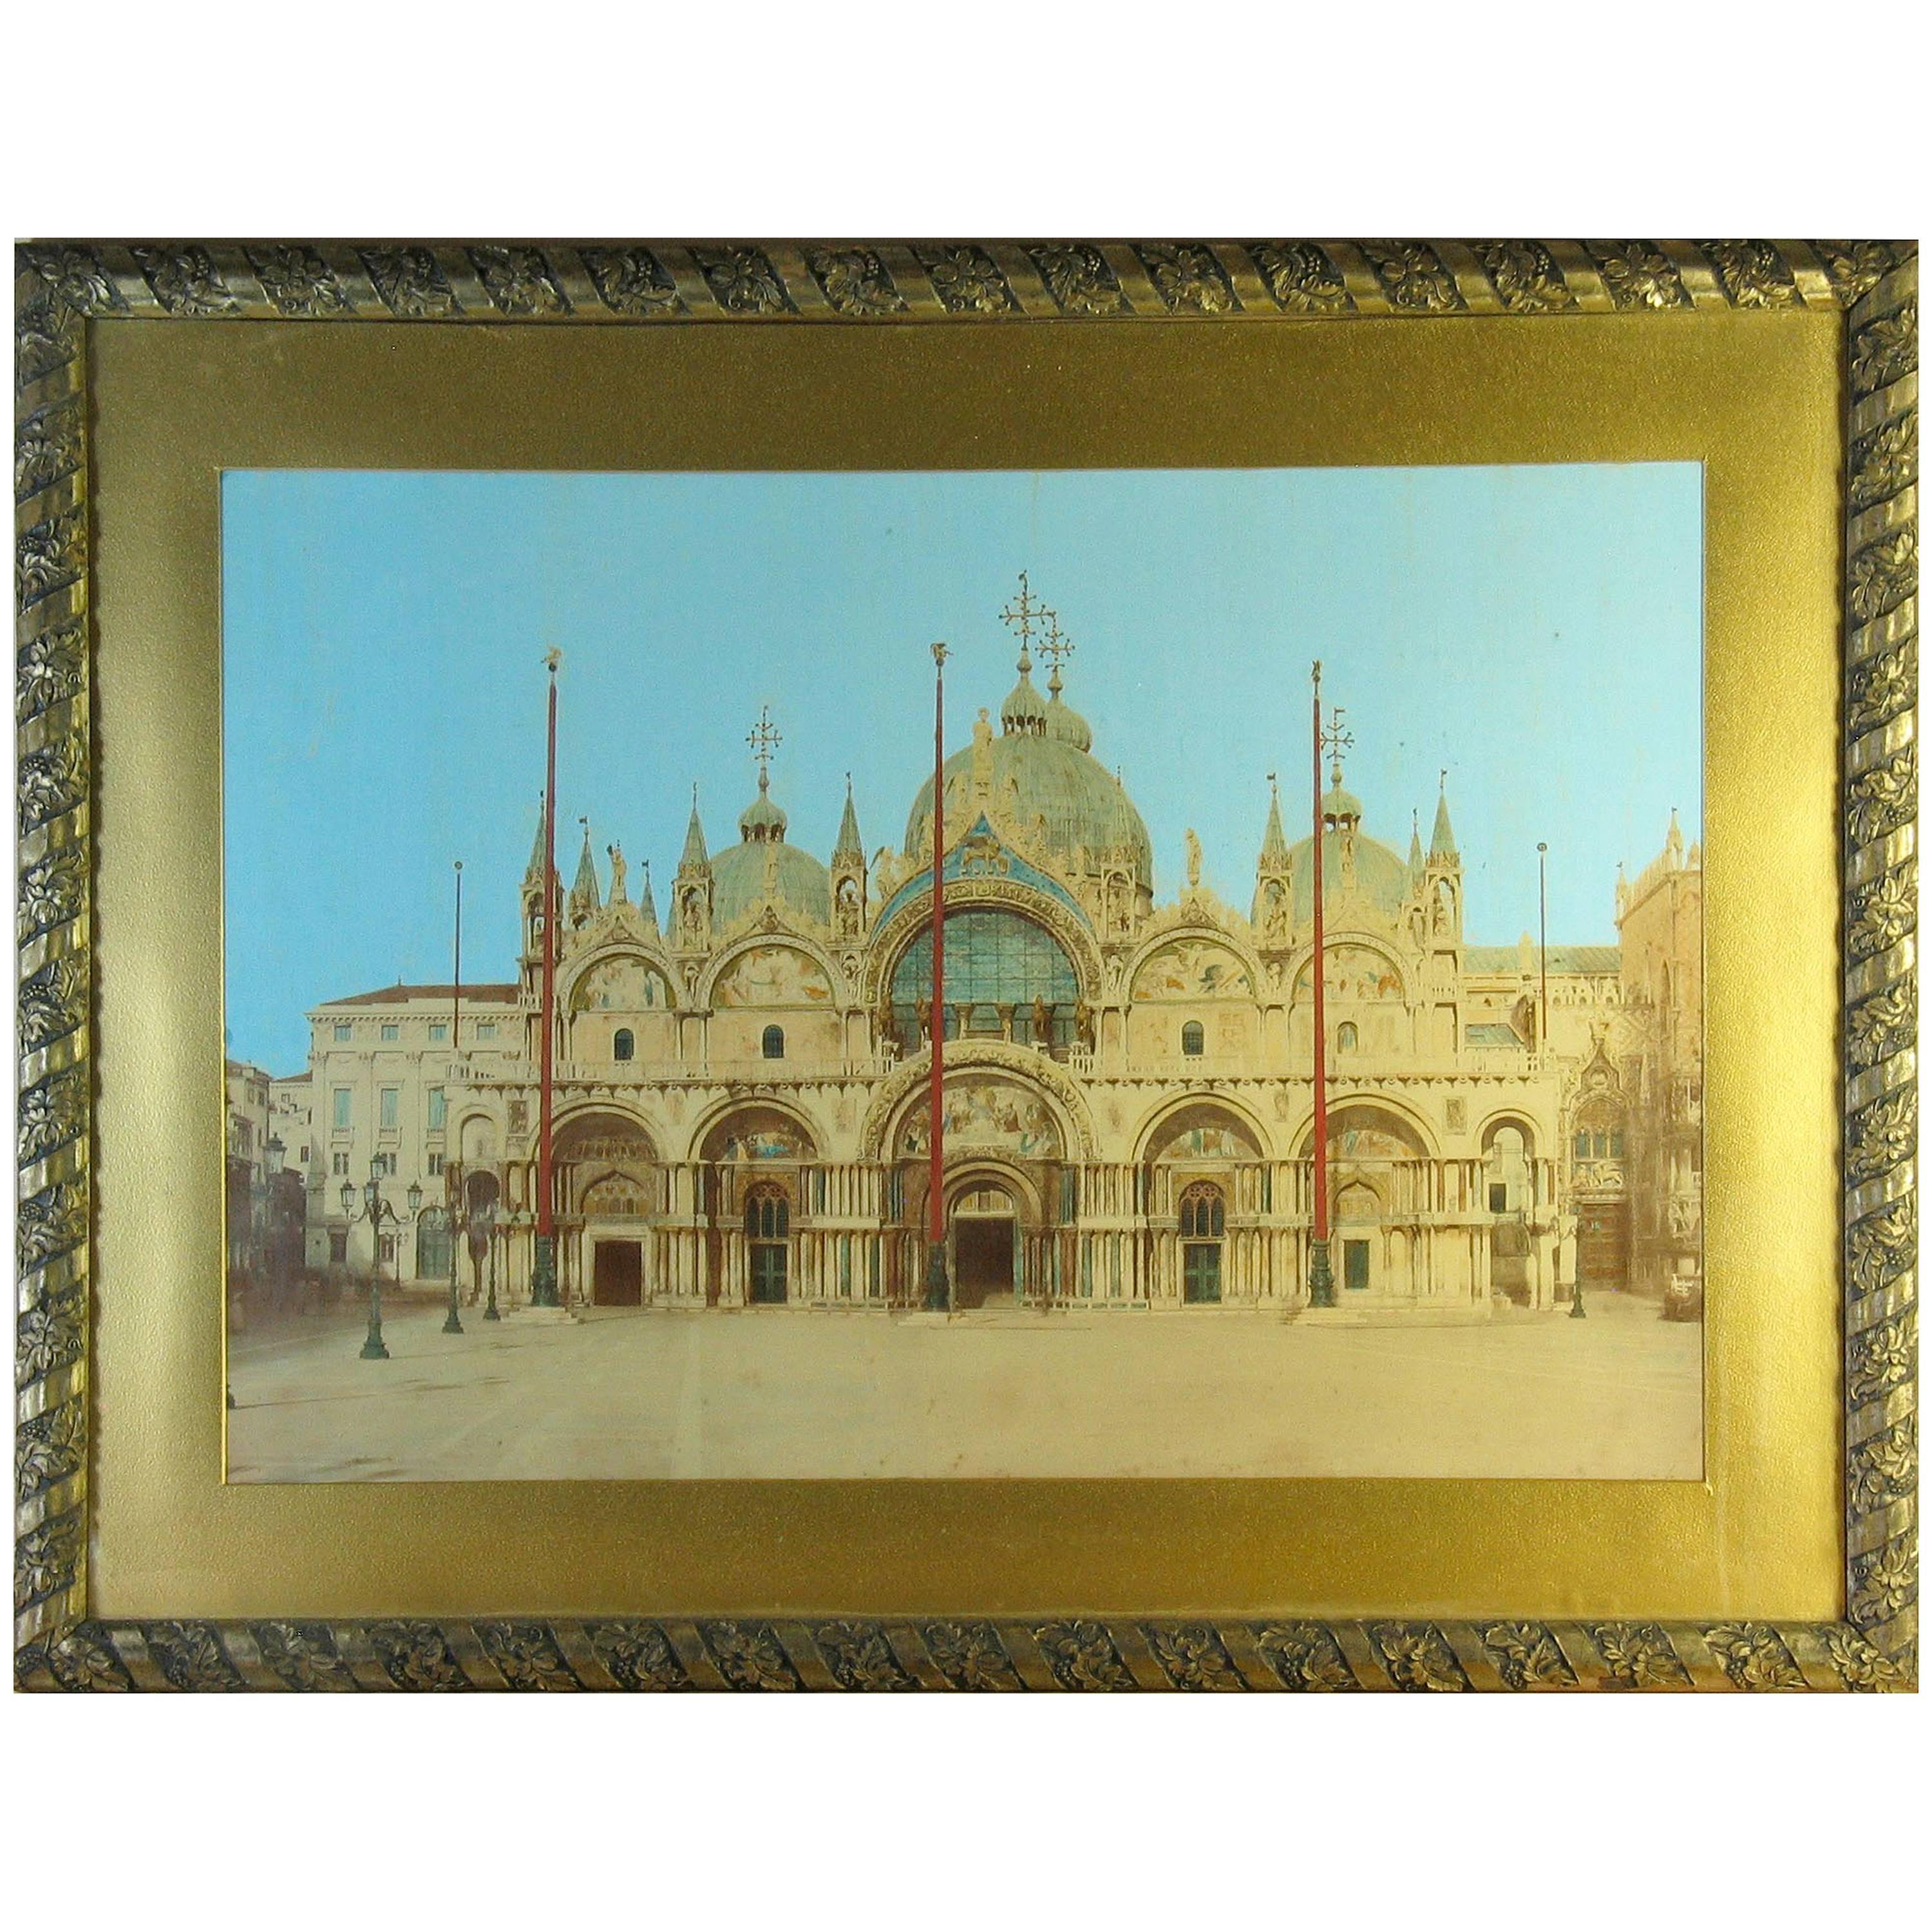 Impressive Hand-Tinted Albumen Mammoth Plate Print of Basilica San Marco Venice